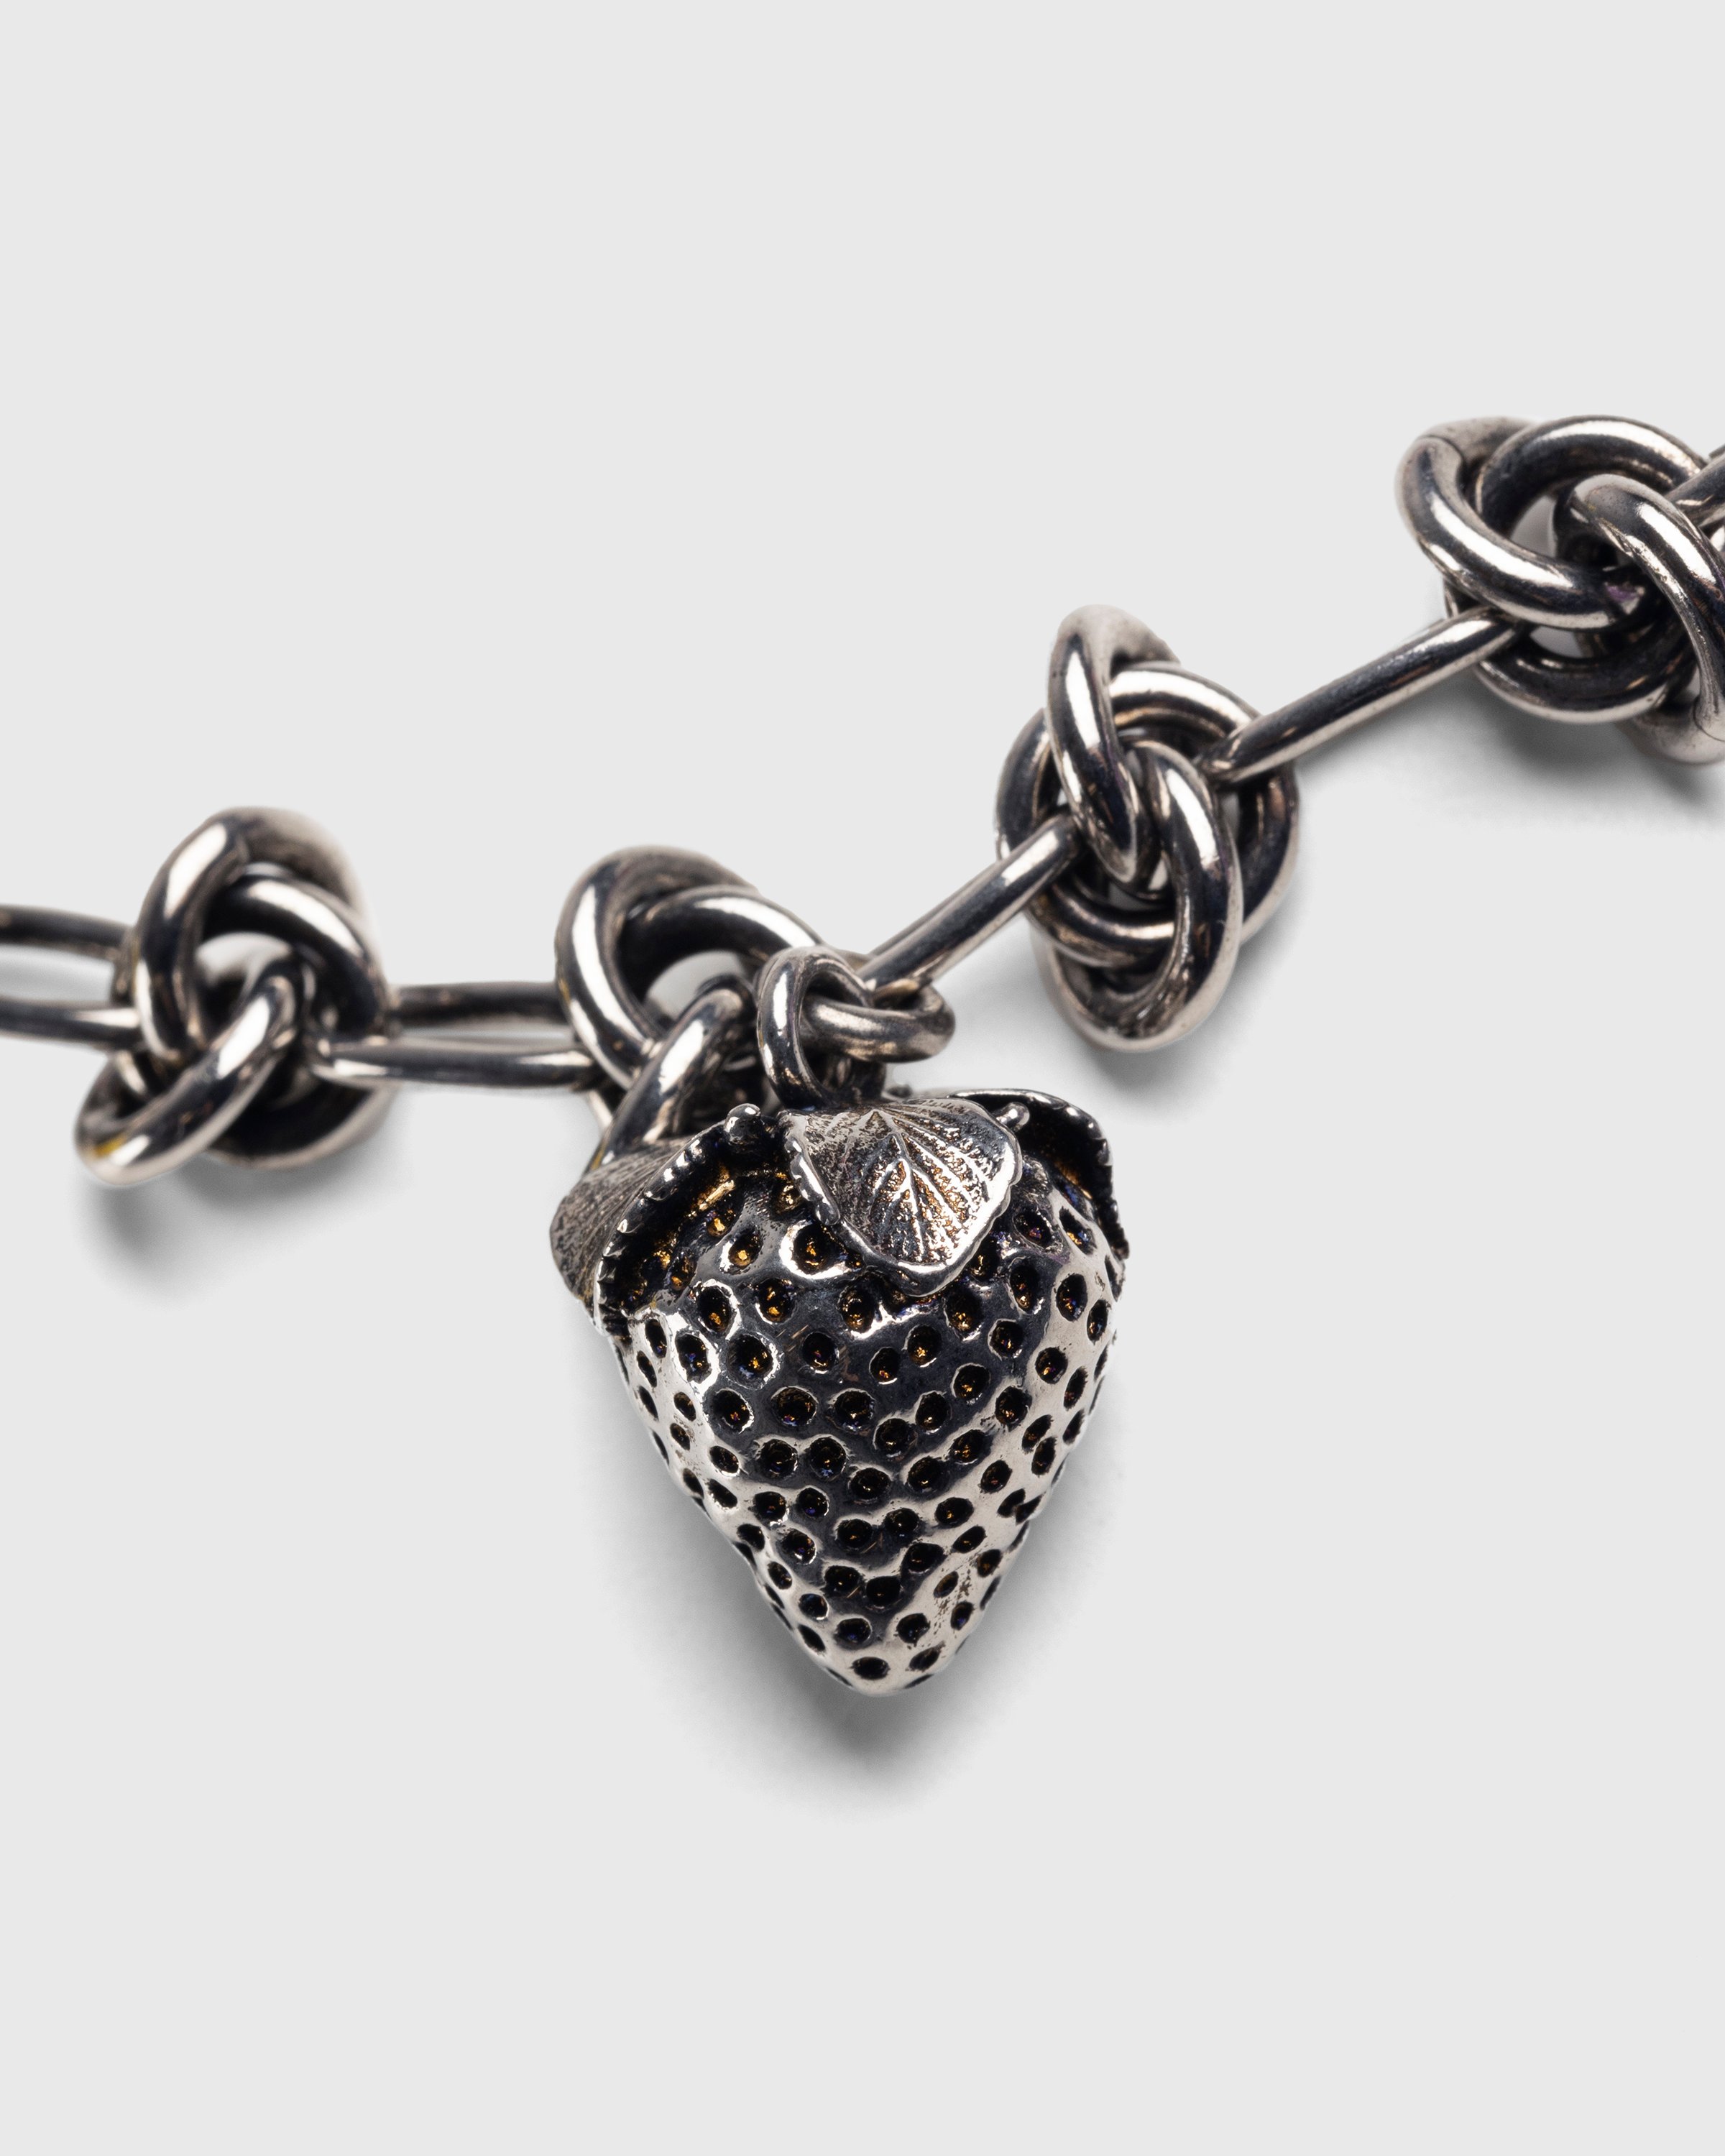 Acne Studios - Charm Necklace Antique Silver - Accessories - Multi - Image 2